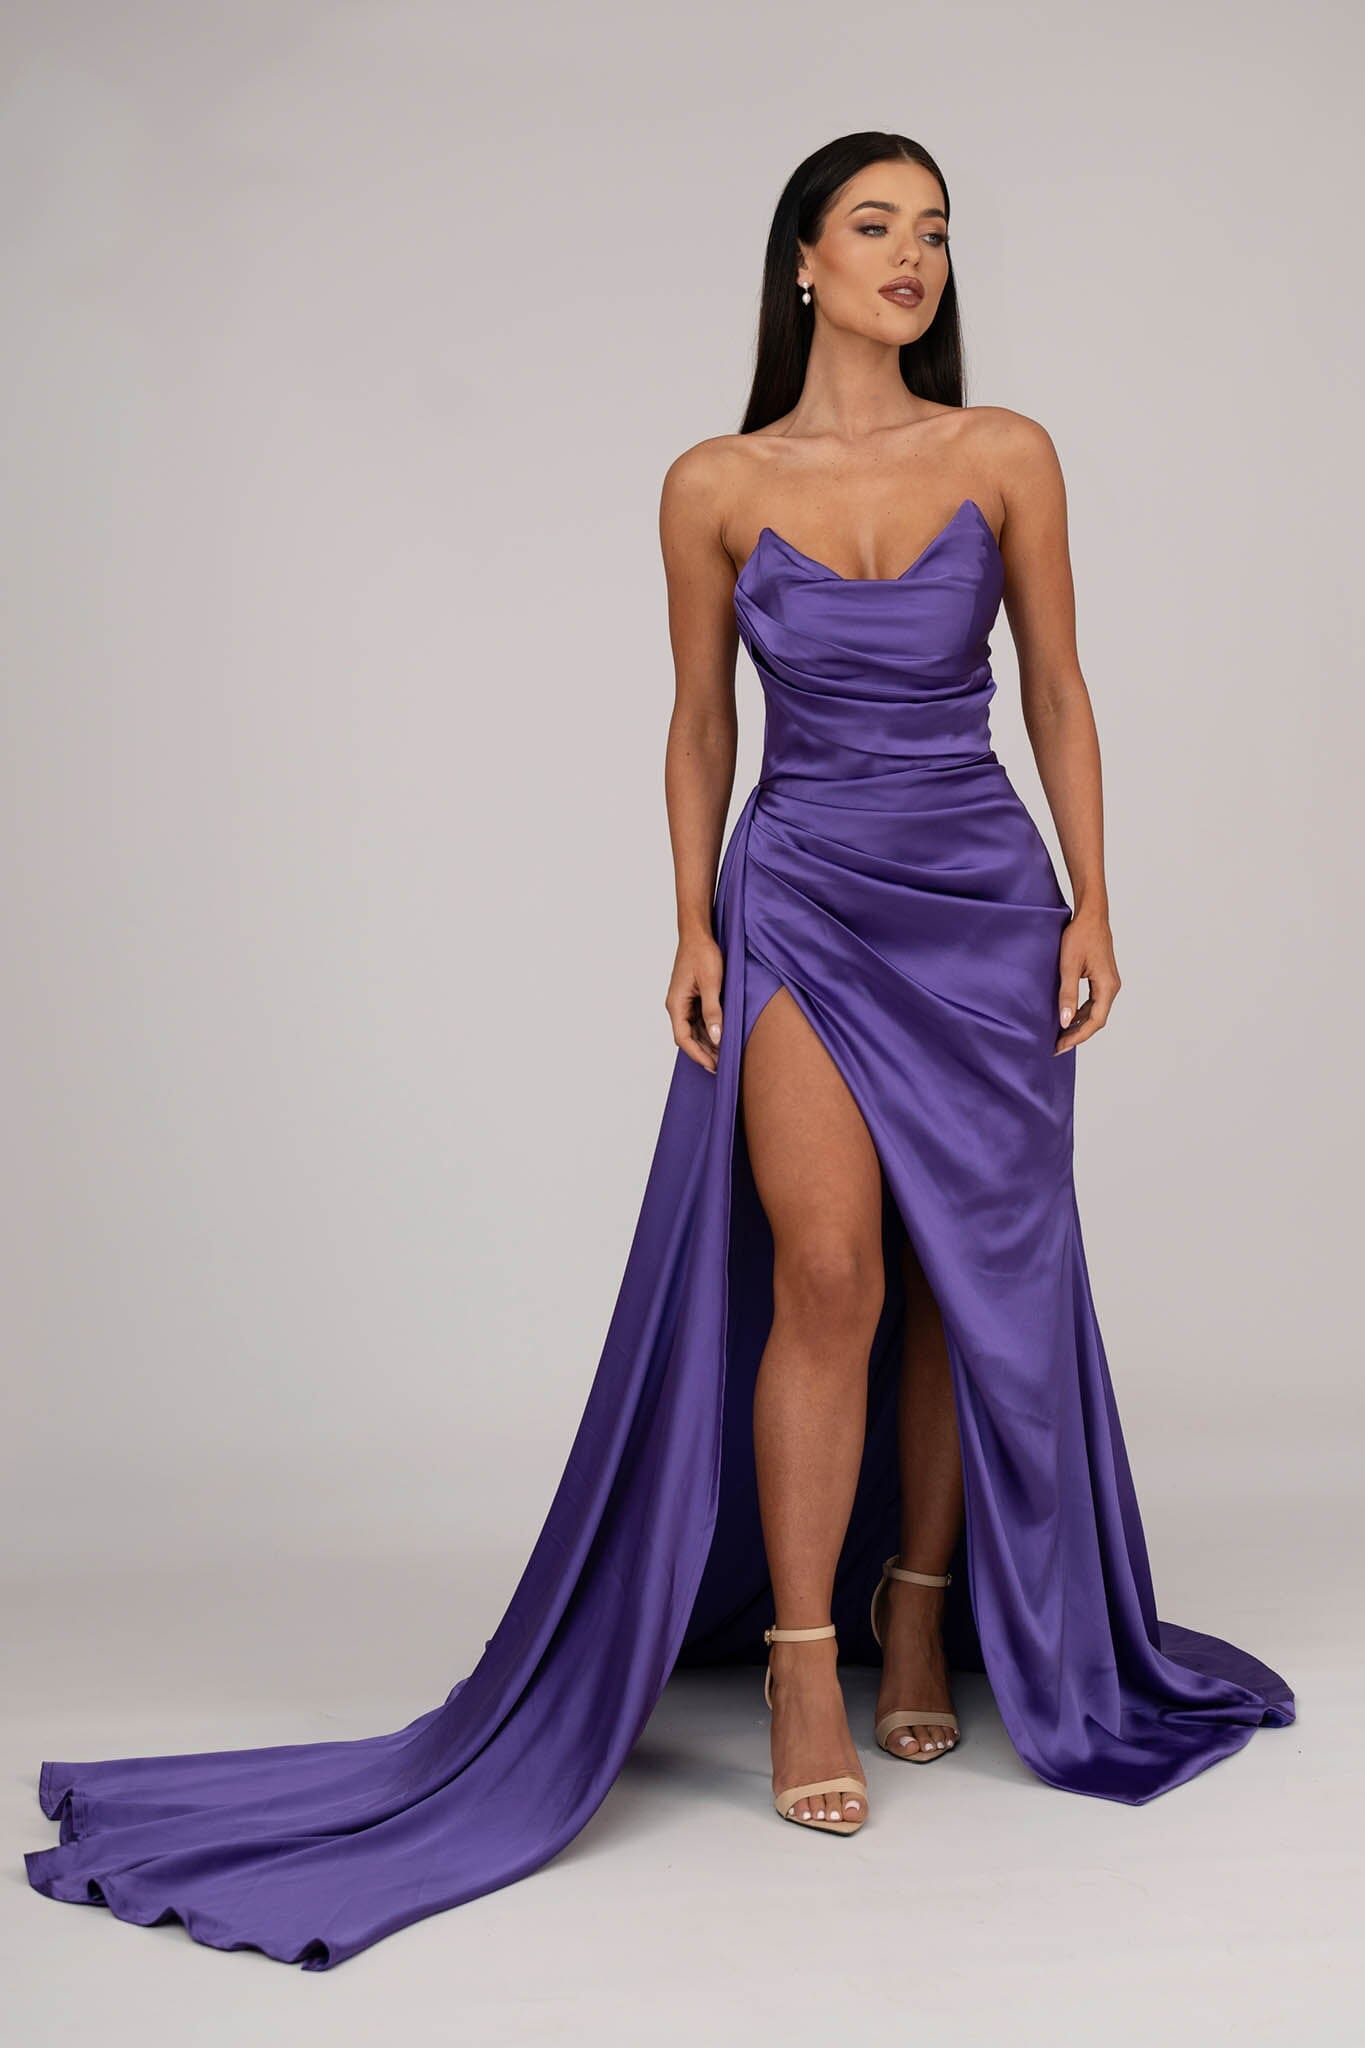 Simple purple satin long prom dress purple formal dress,PD22856 ·  lovebridal · Online Store Powered by Storenvy